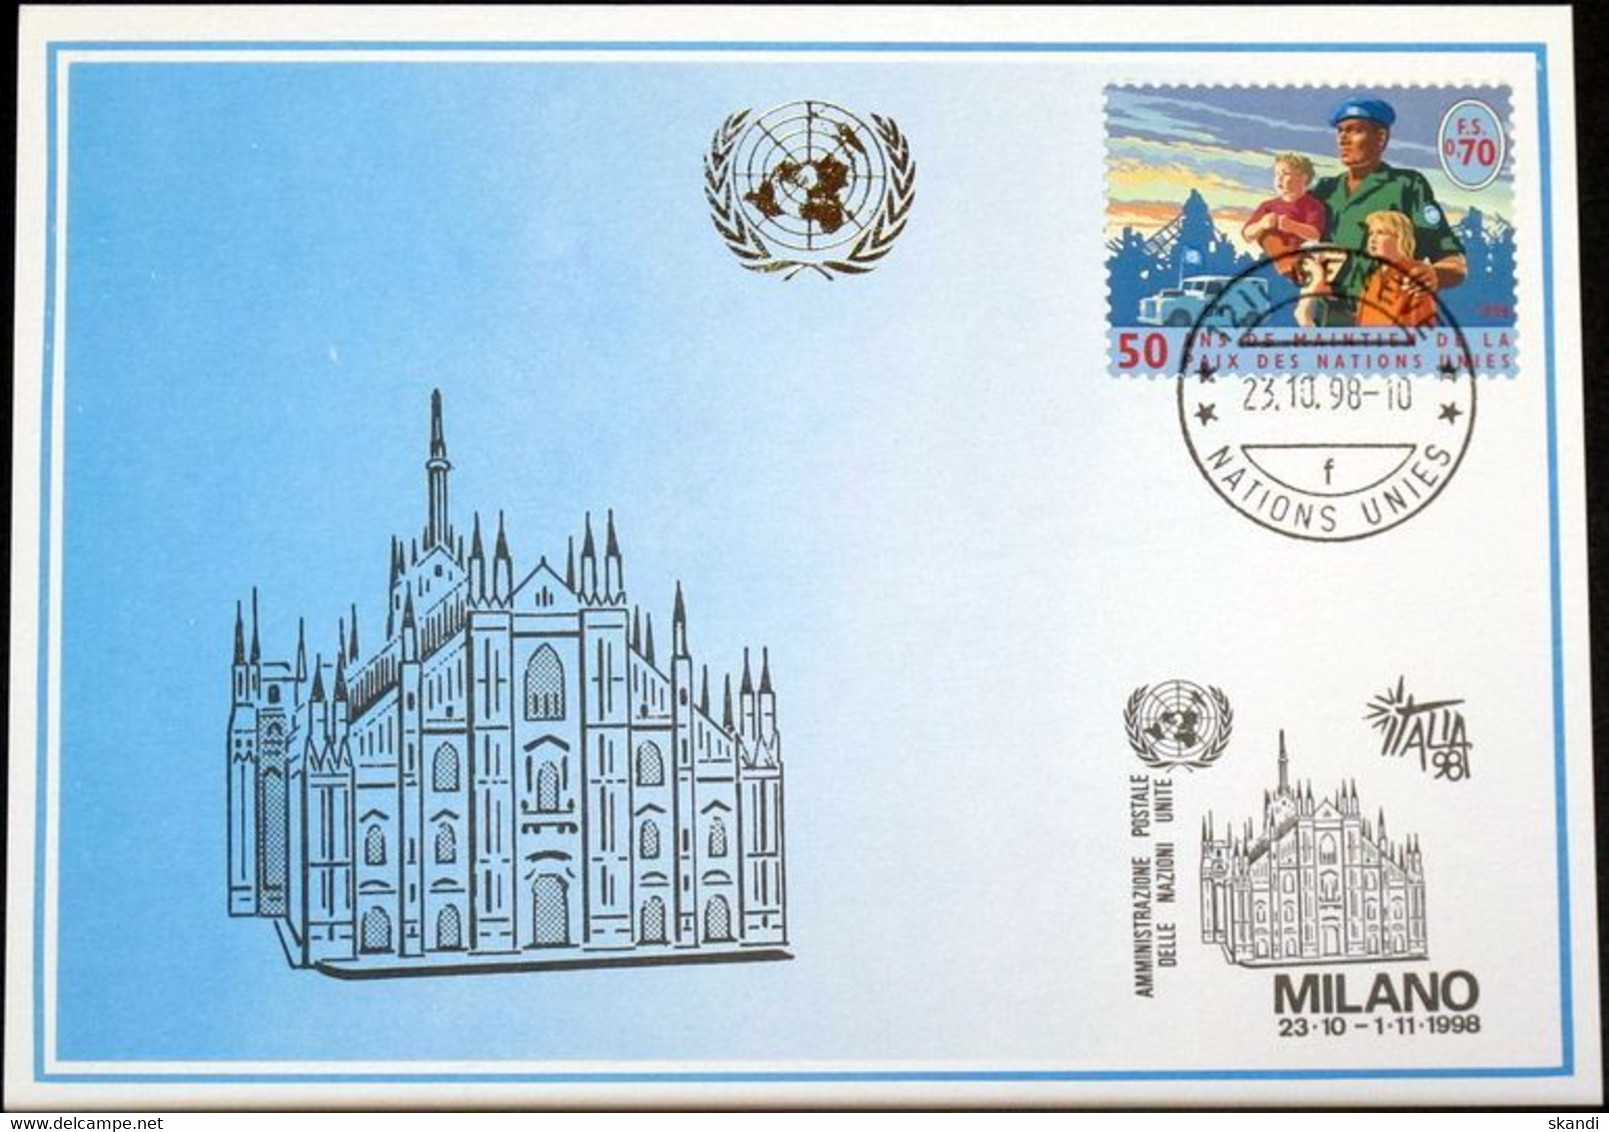 UNO GENF 1998 Mi-Nr. 296 Blaue Karte - Blue Card - Lettres & Documents